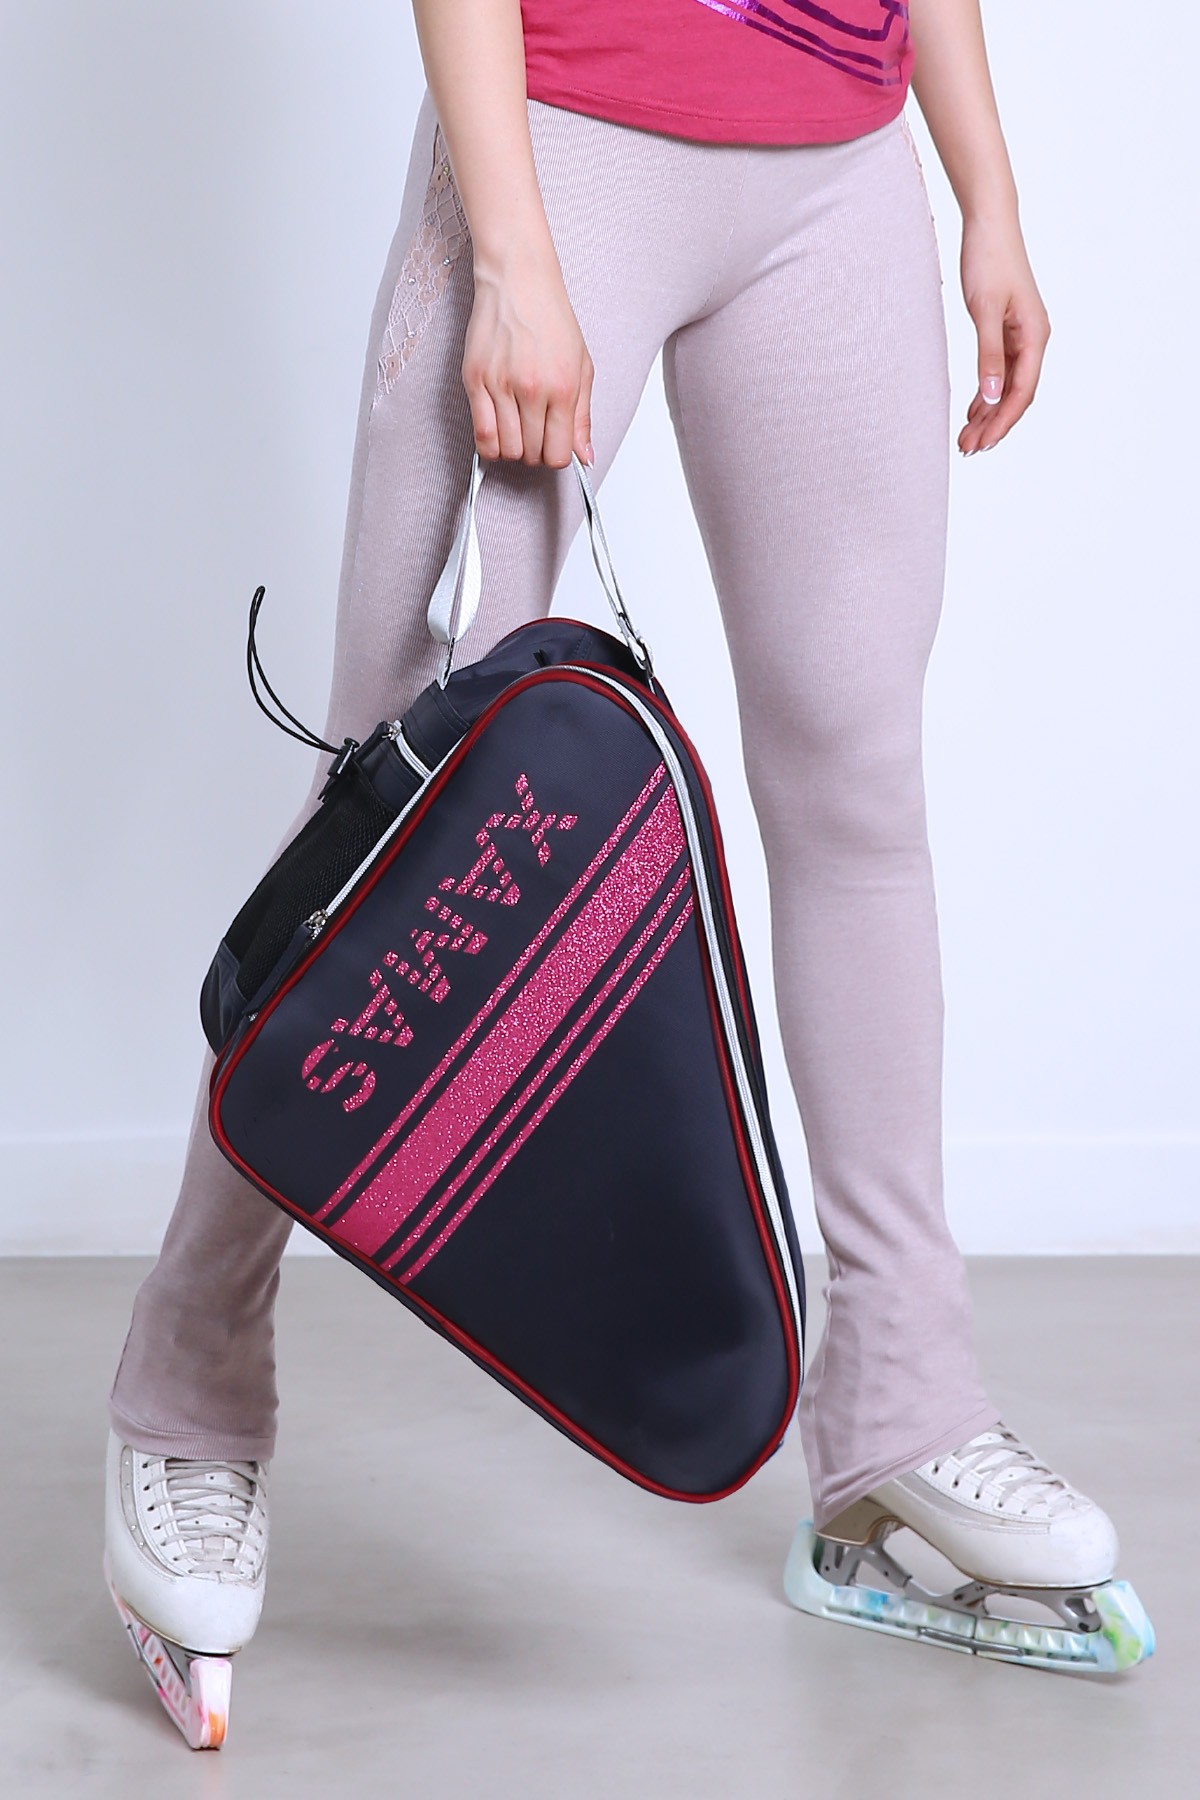 Premium Pro XAMAS De Luxe Skate Bag - Royal Blue Hot Pink Glitter